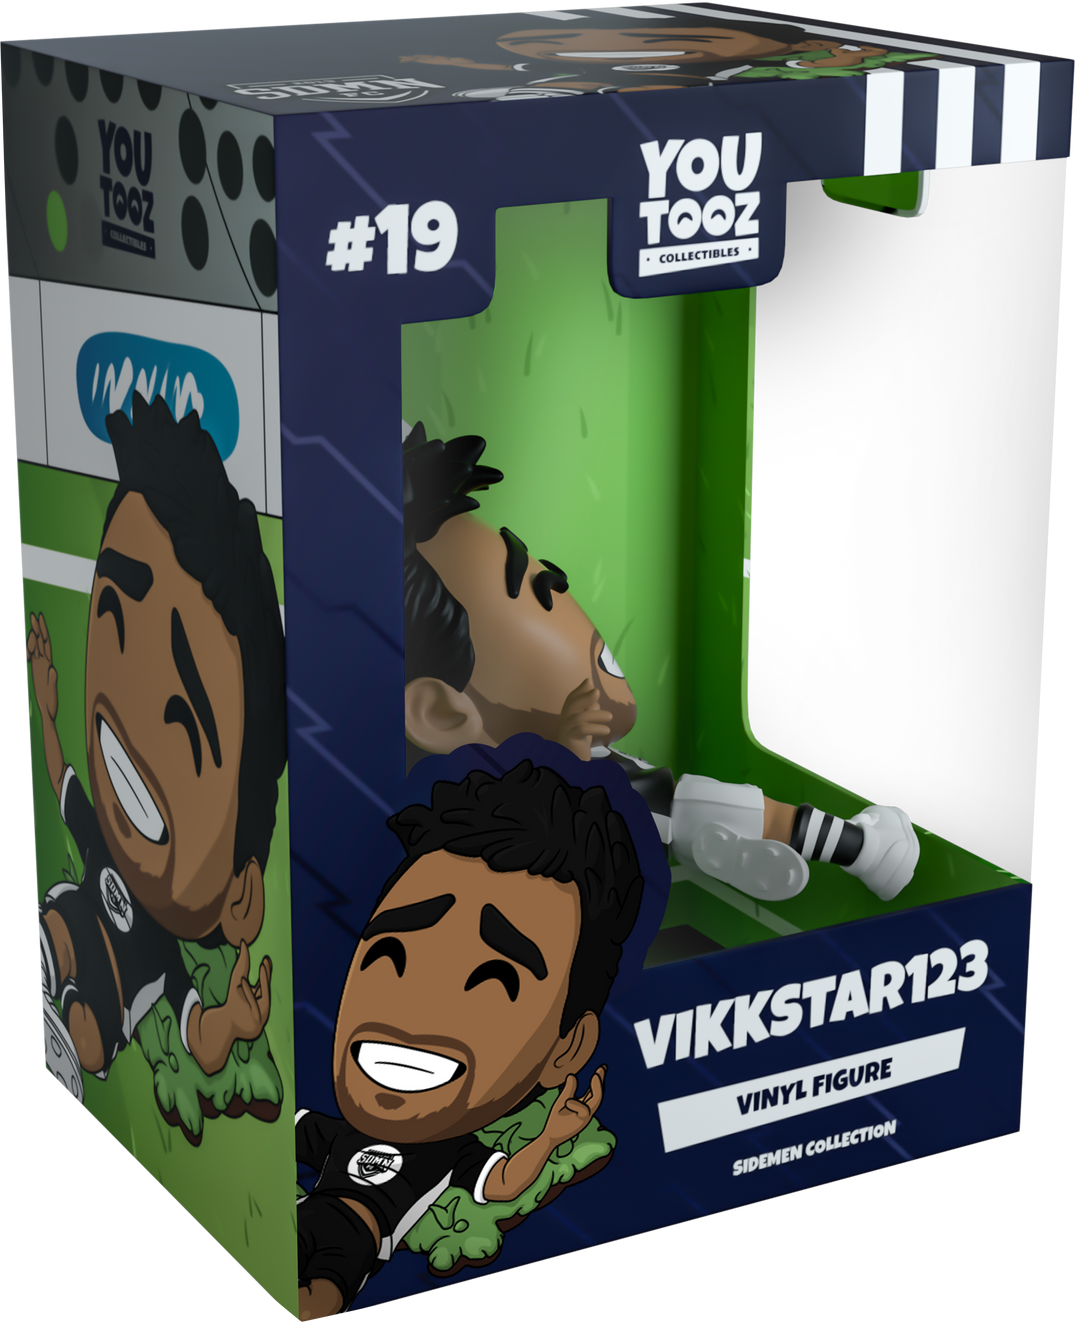 Youtooz Sidemen Vik Vikkstar123! #19 Vinyl Figure FC Collection